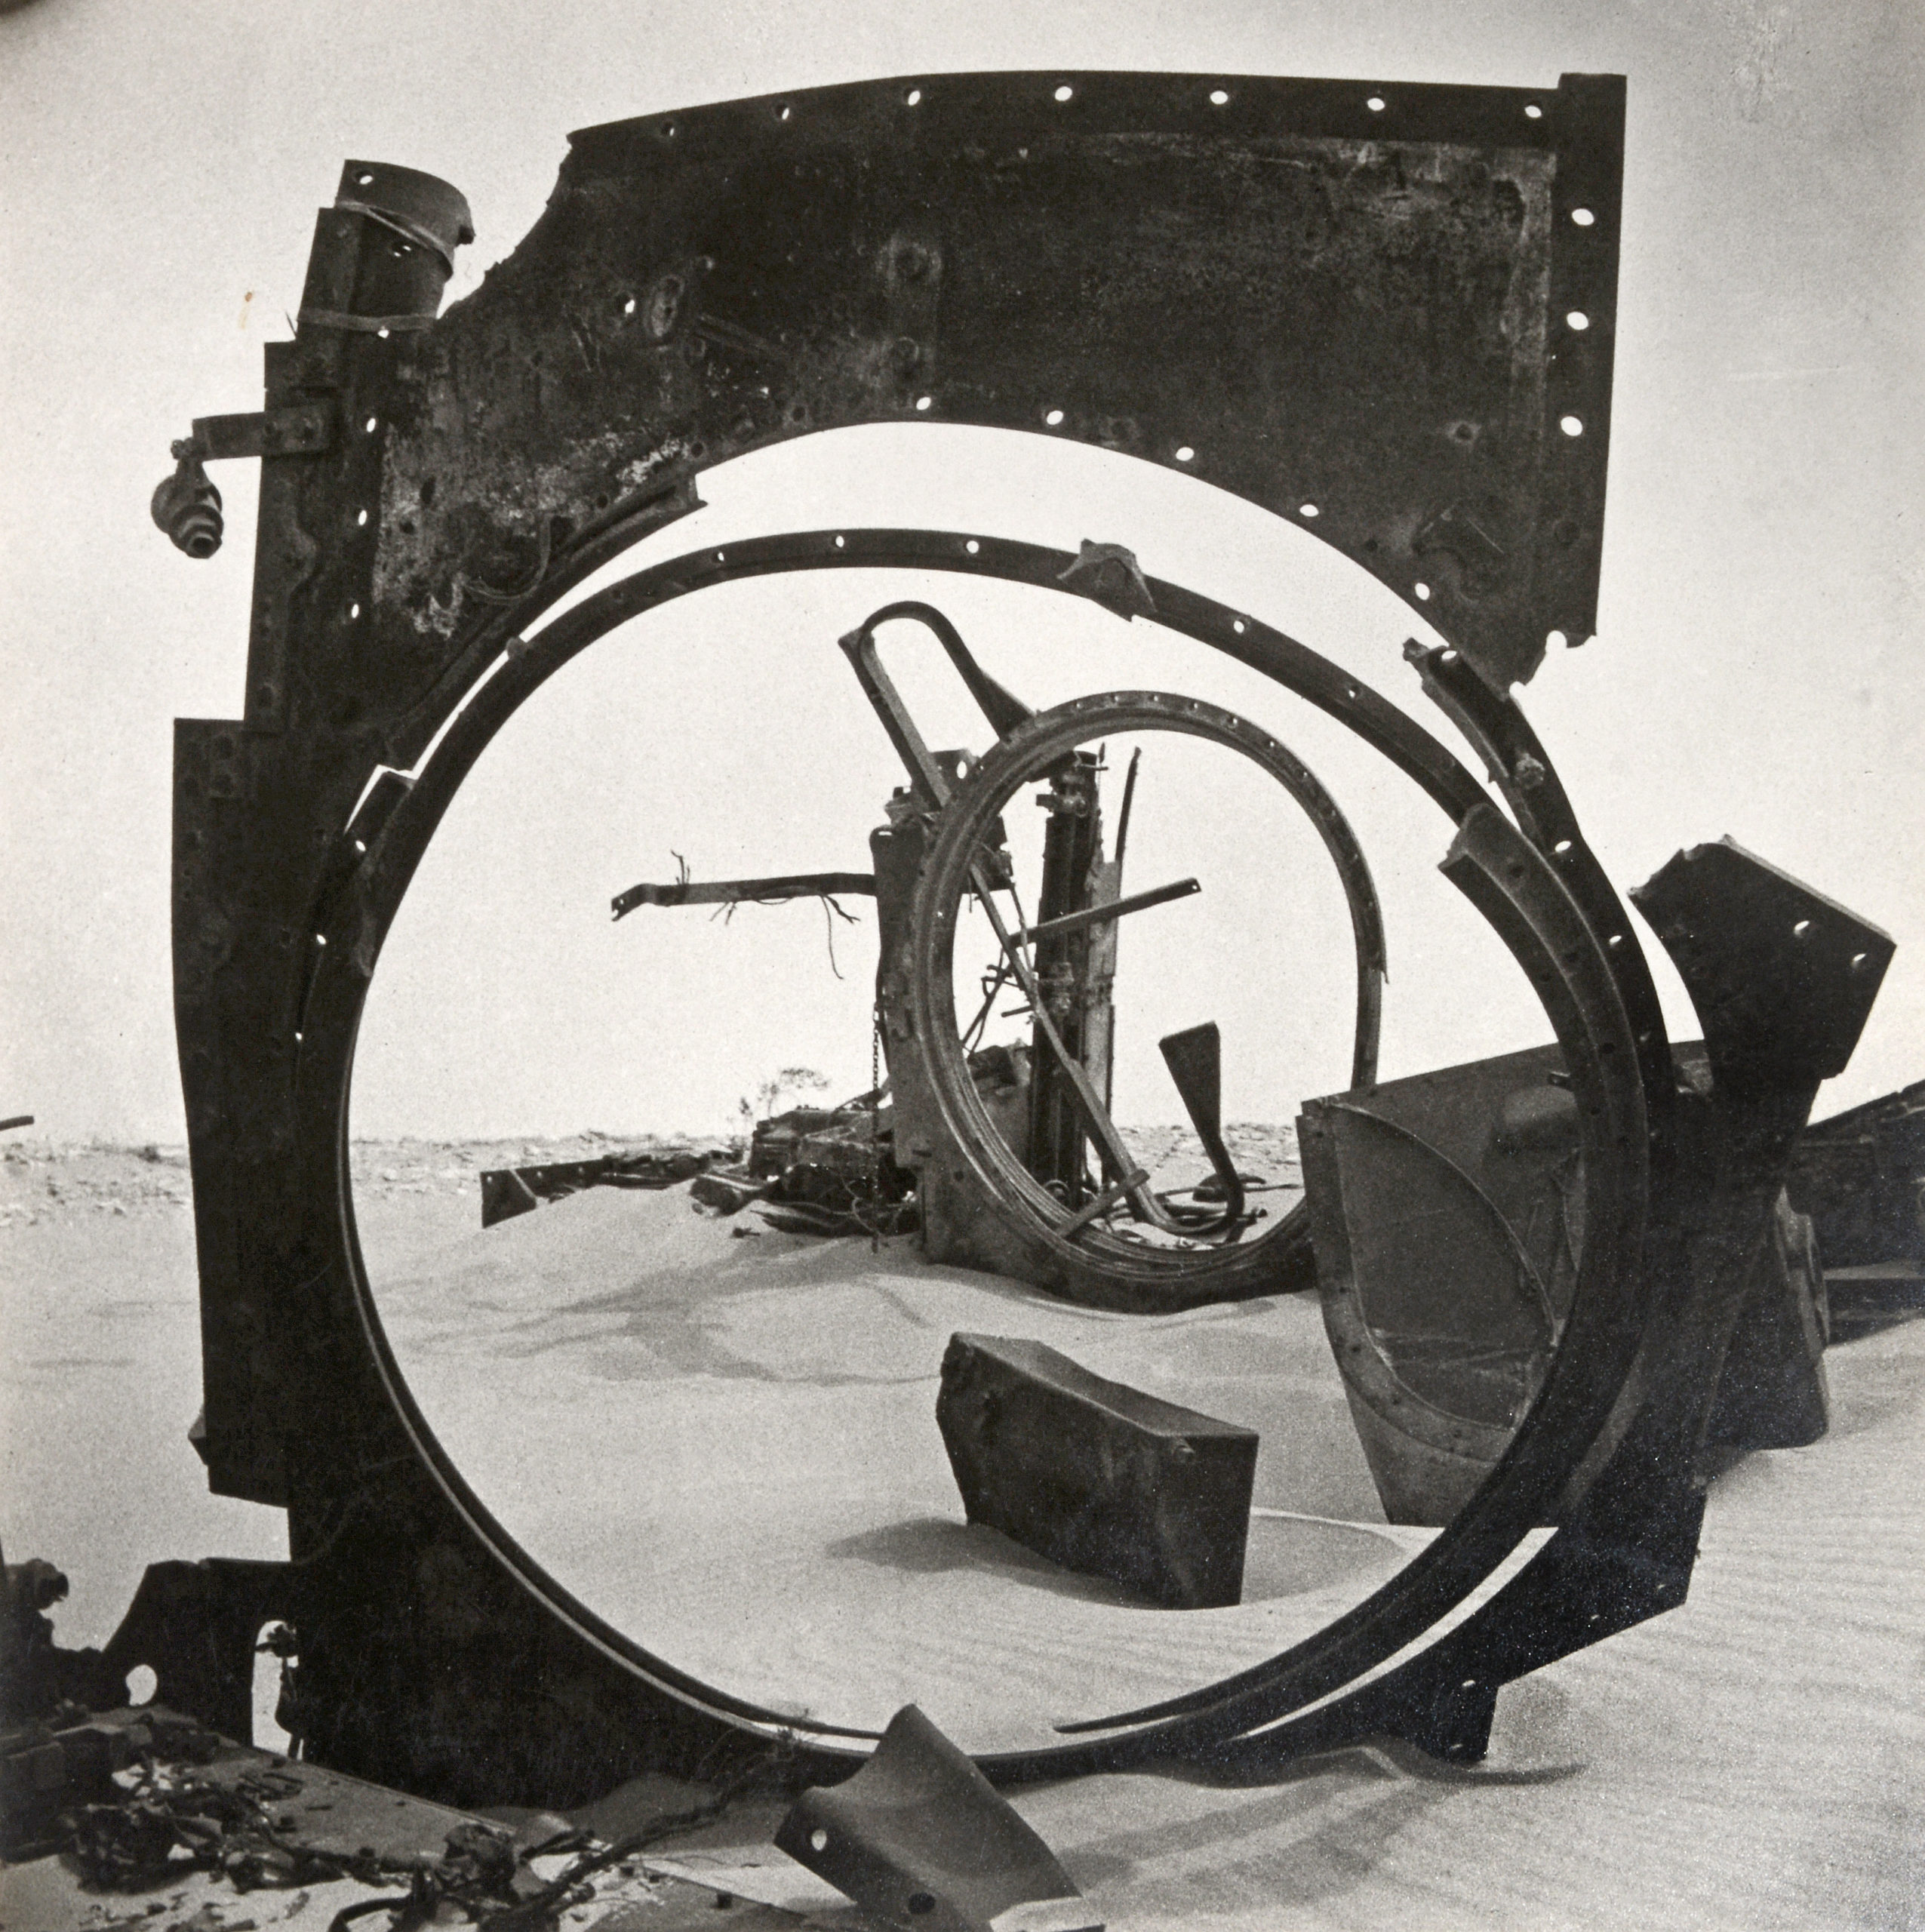 'Desert Debris', Sidi Rezegh, Libya, 1942